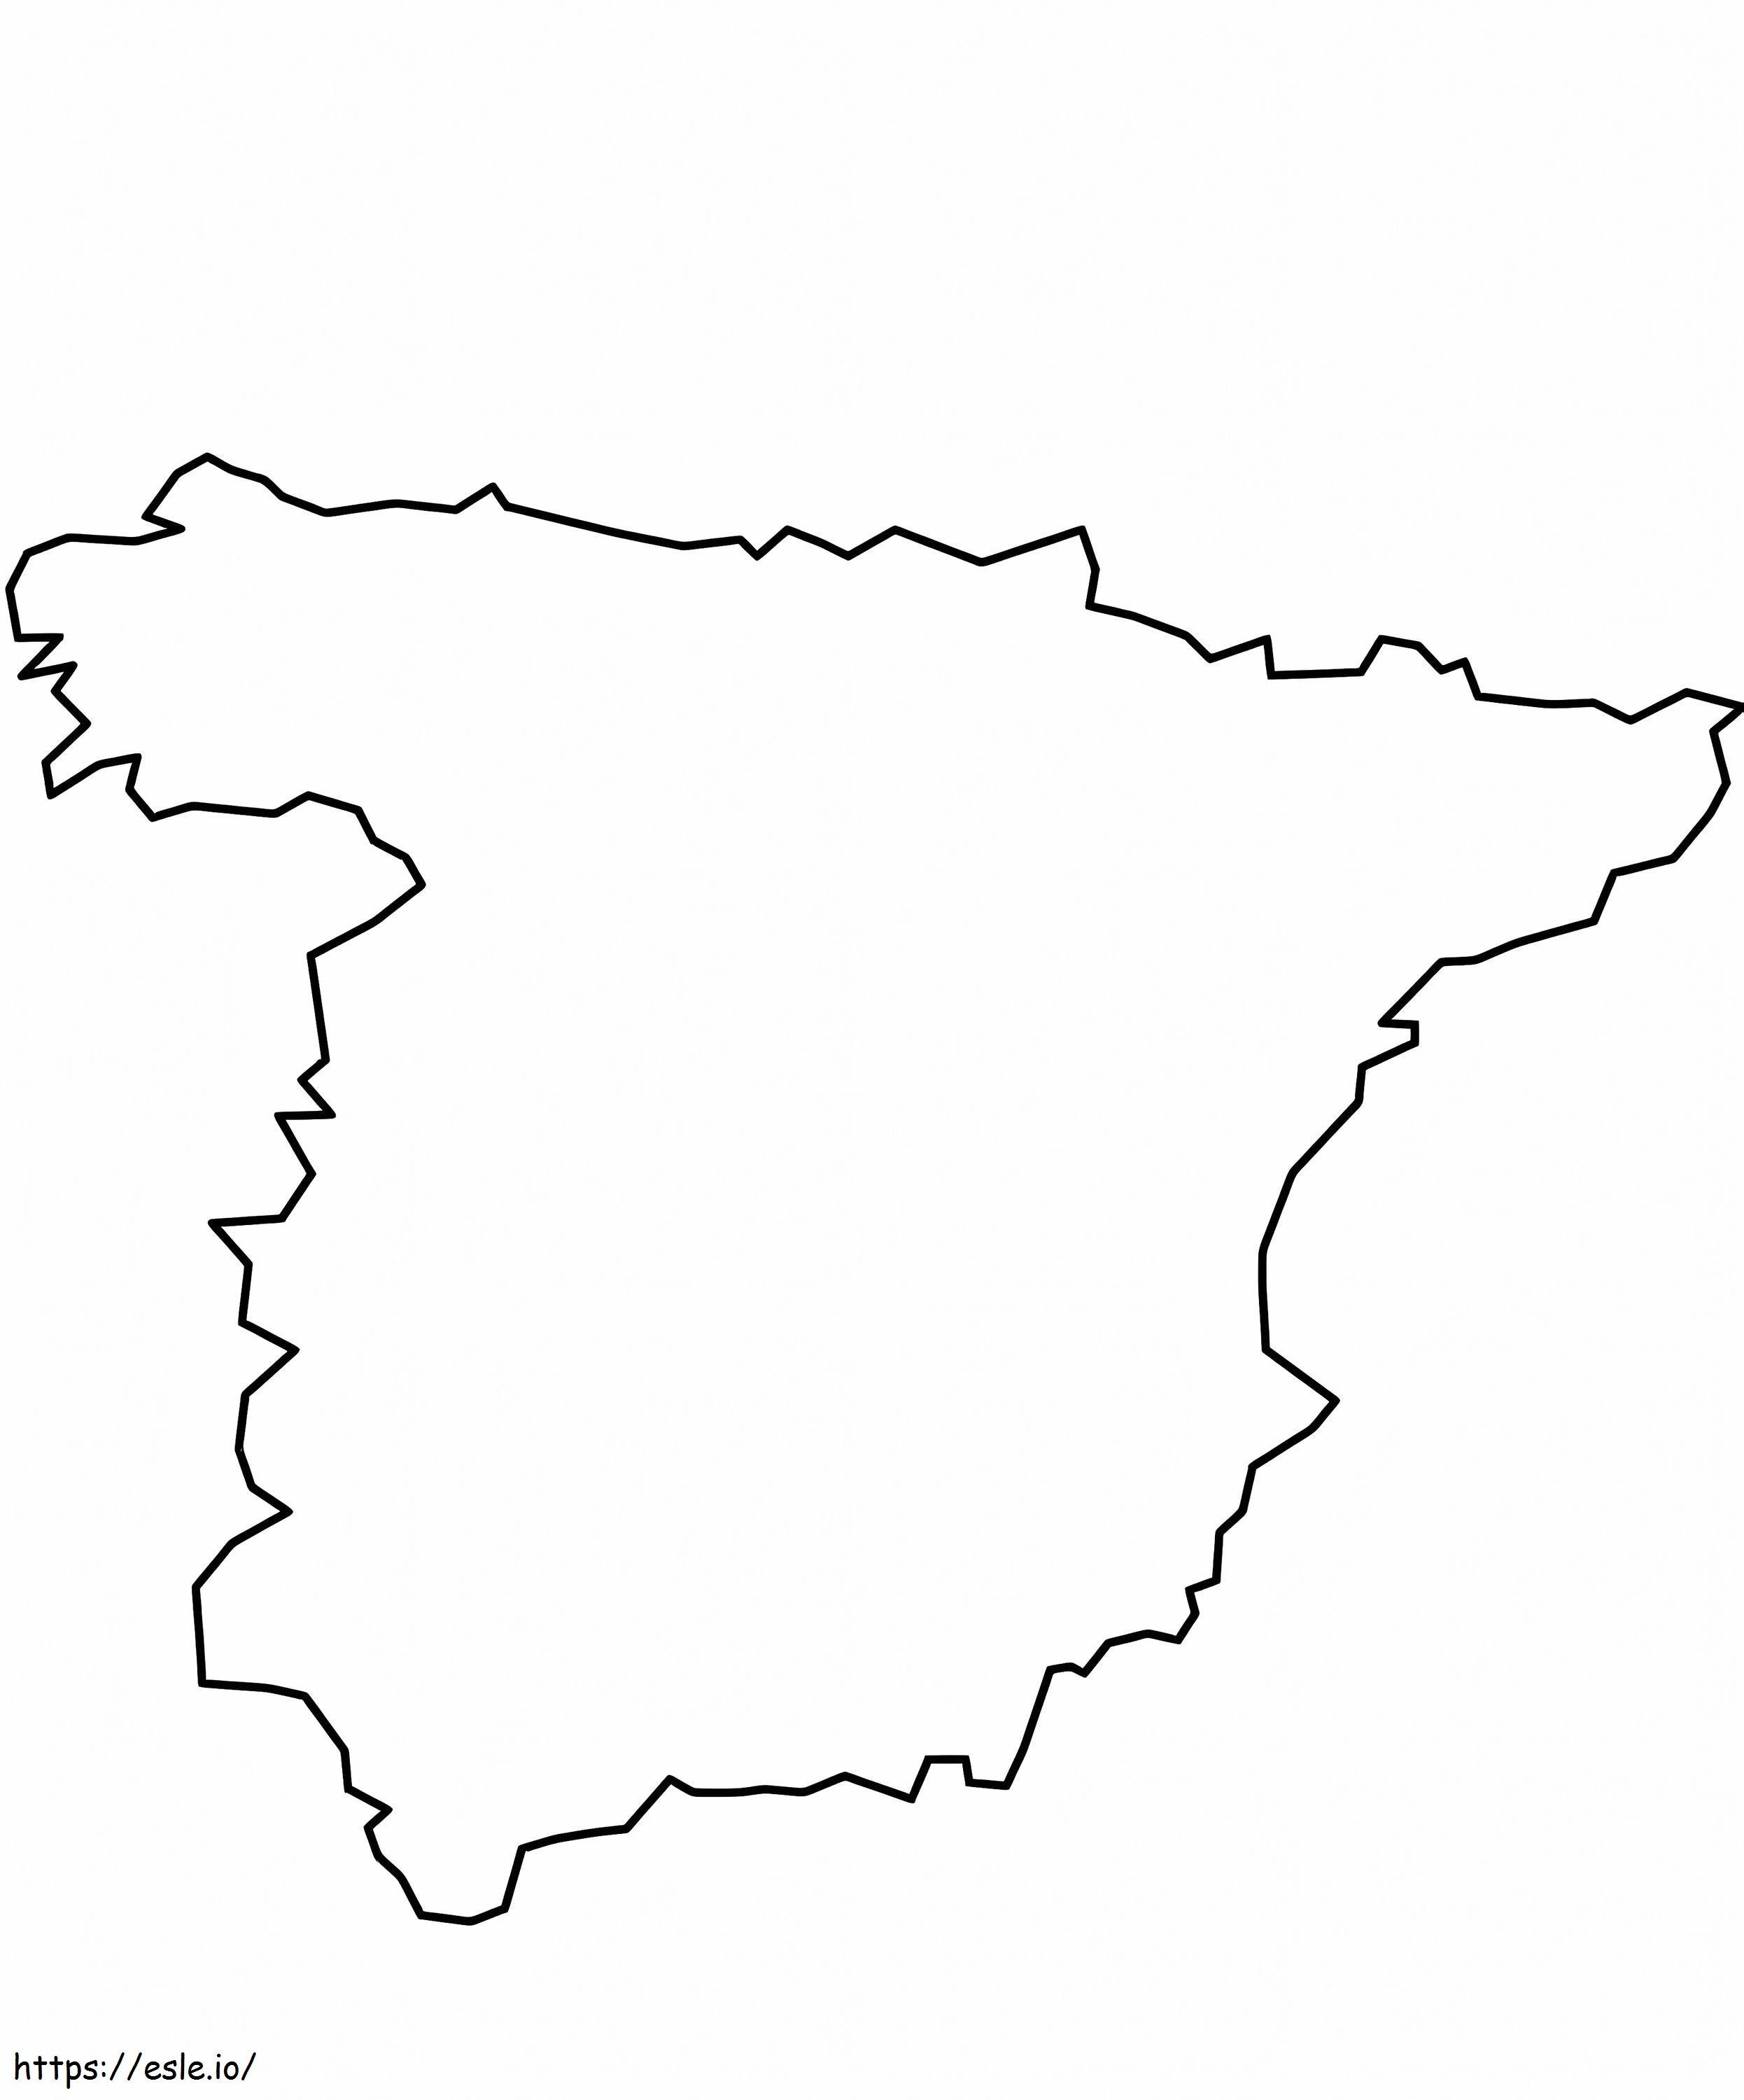 İspanya Anahat Haritası boyama